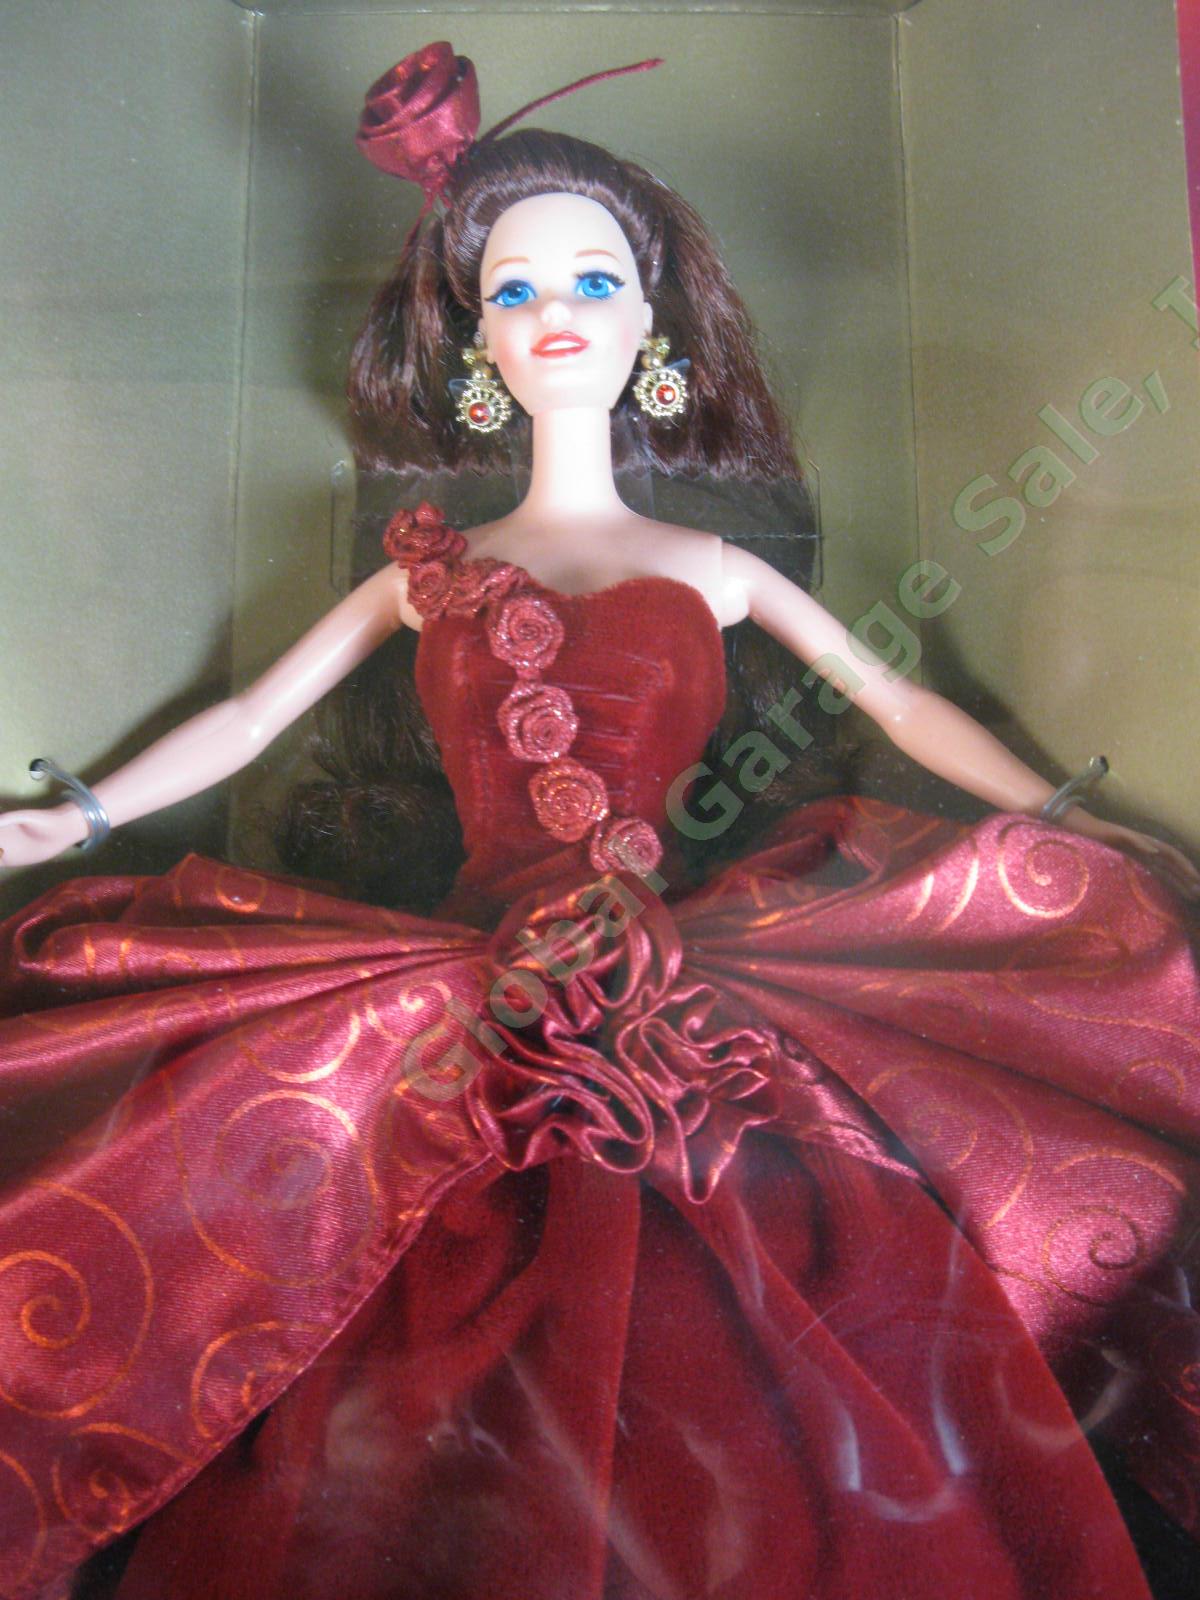 2 NRFB 15140 Radiant Rose & 26464 Cracker Barrel Country Charm Barbie Doll Lot 2